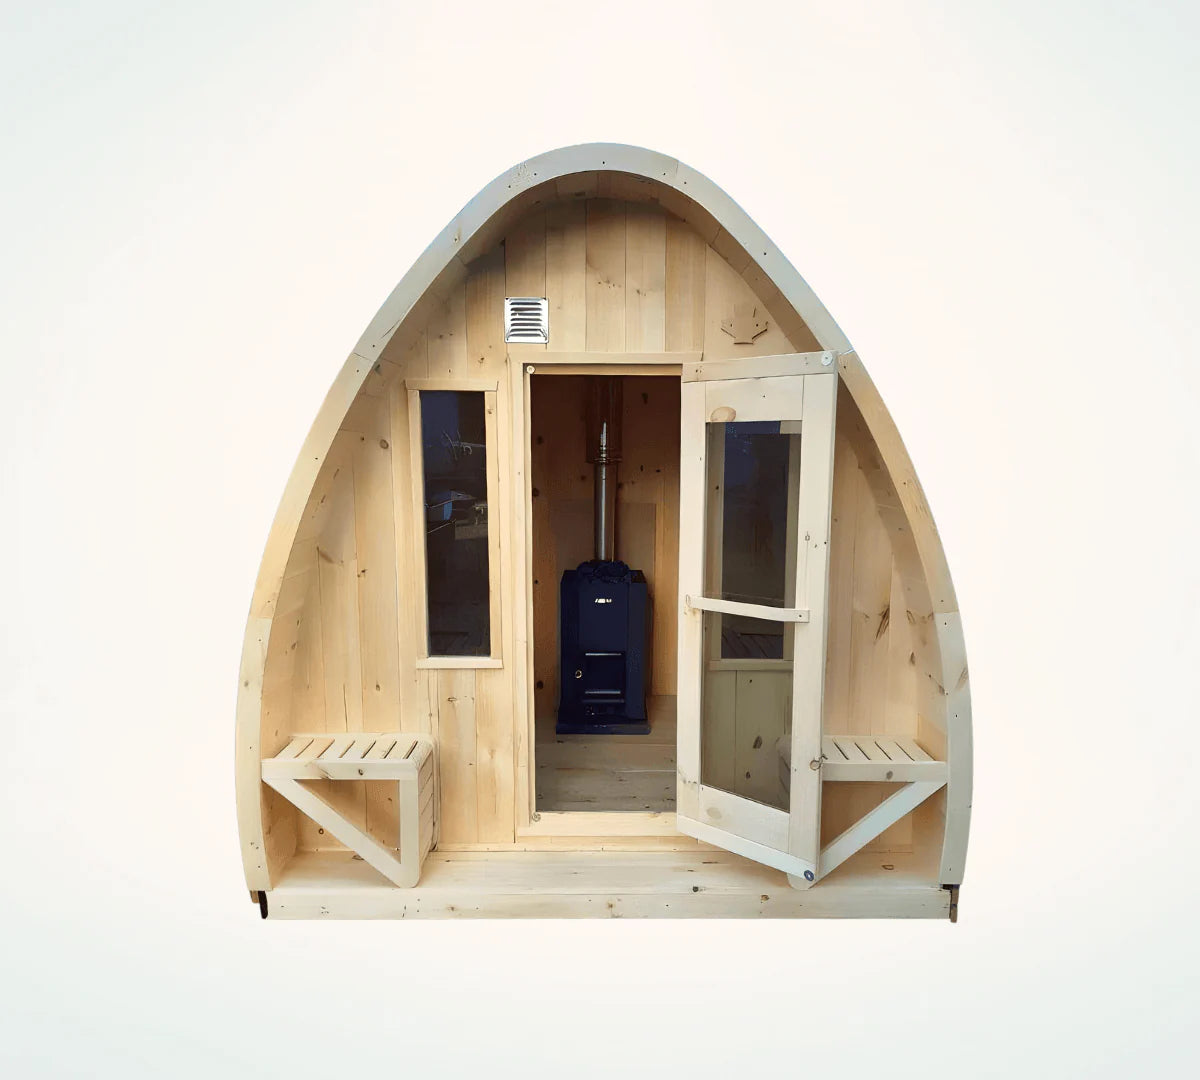 True North Large Pod Outdoor Sauna – Red Cedar, White Cedar, Pine Wood